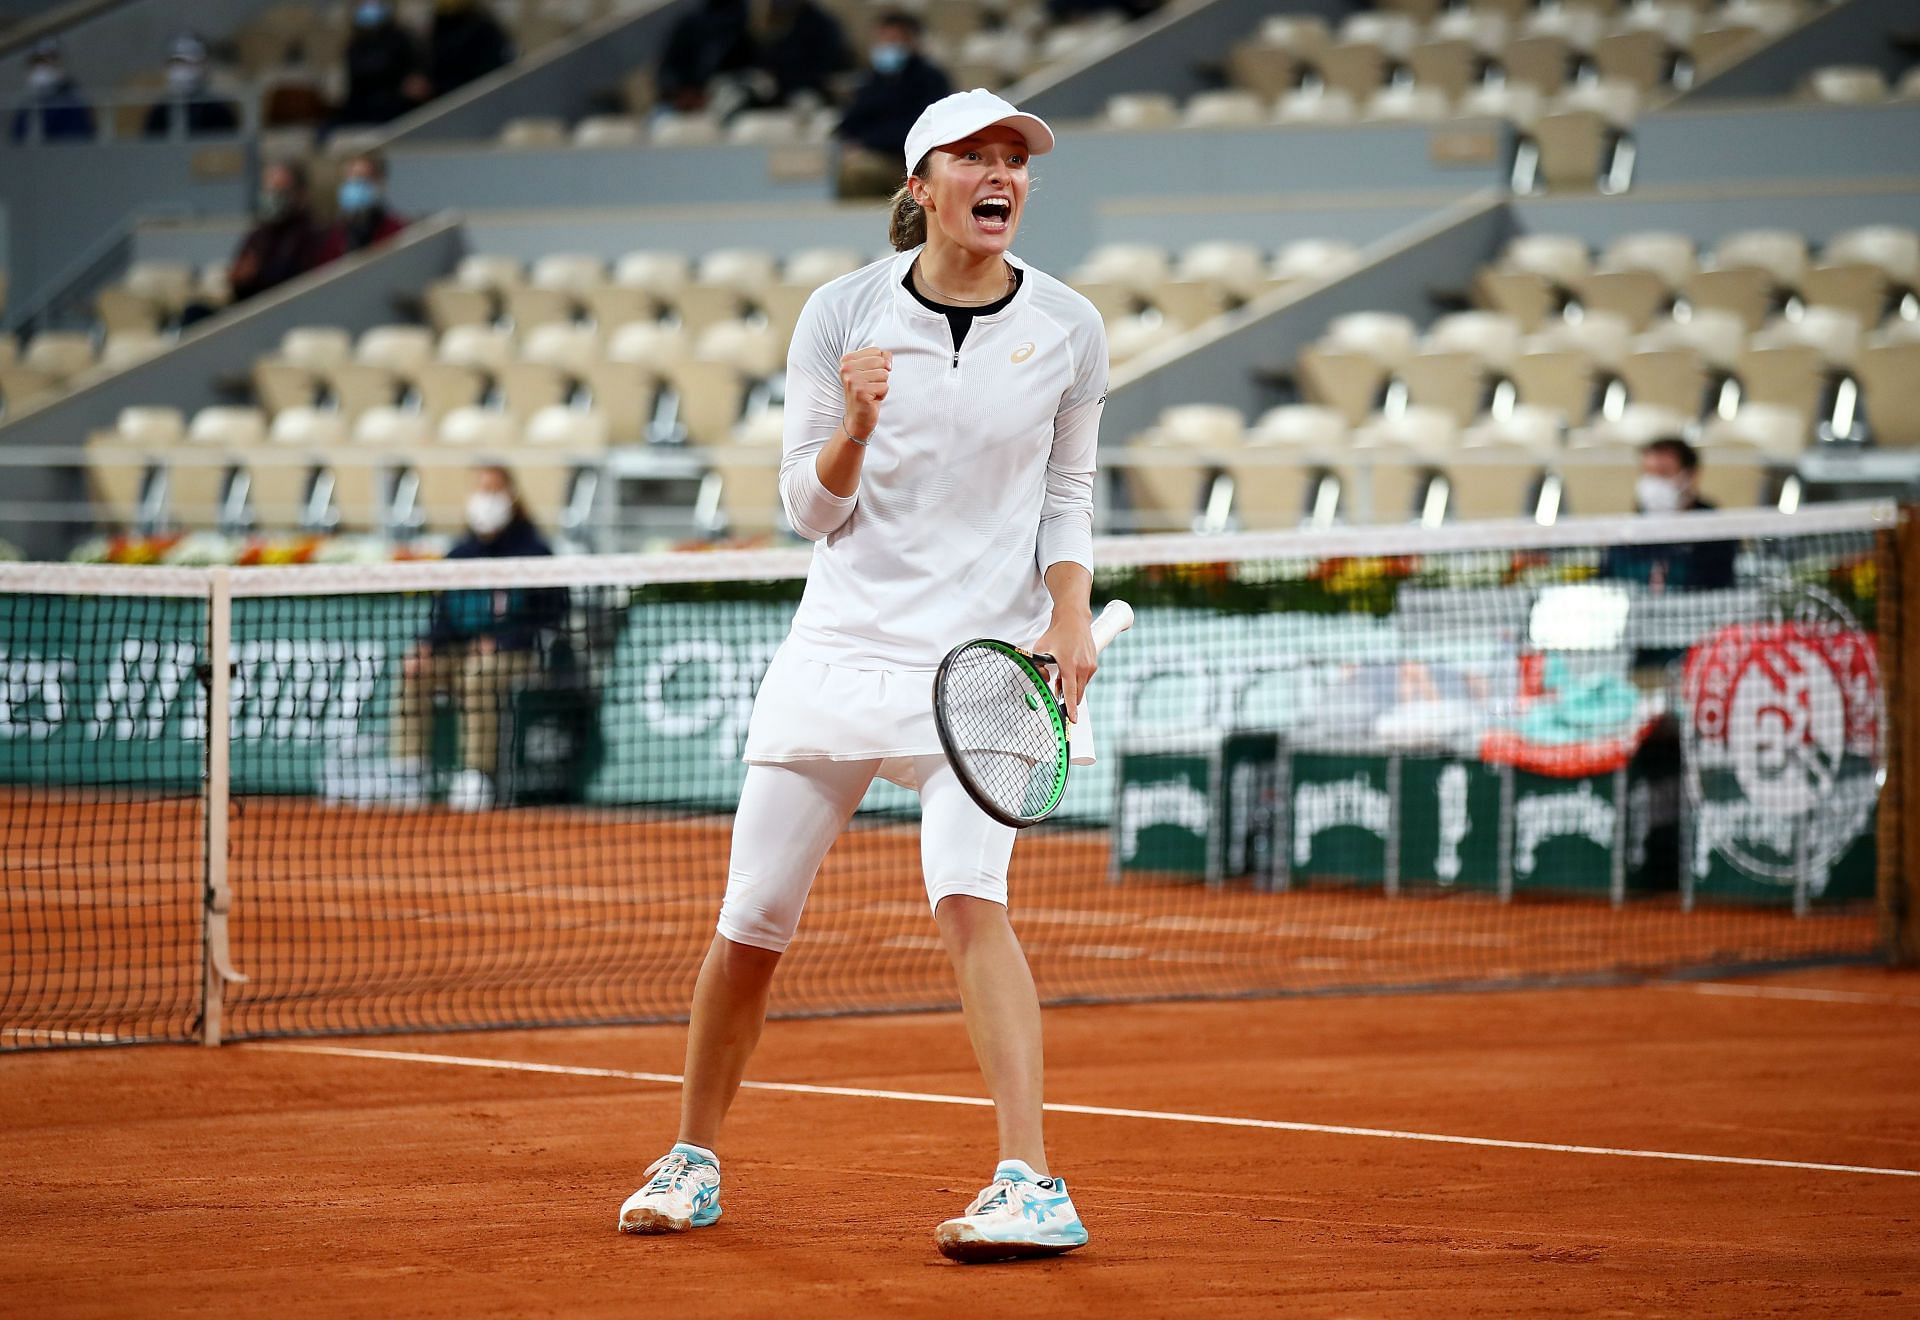 Naomi Osaka took to Twitter to praise Iga Swiatek for her 2020 Roland Garros win over Simona Halep